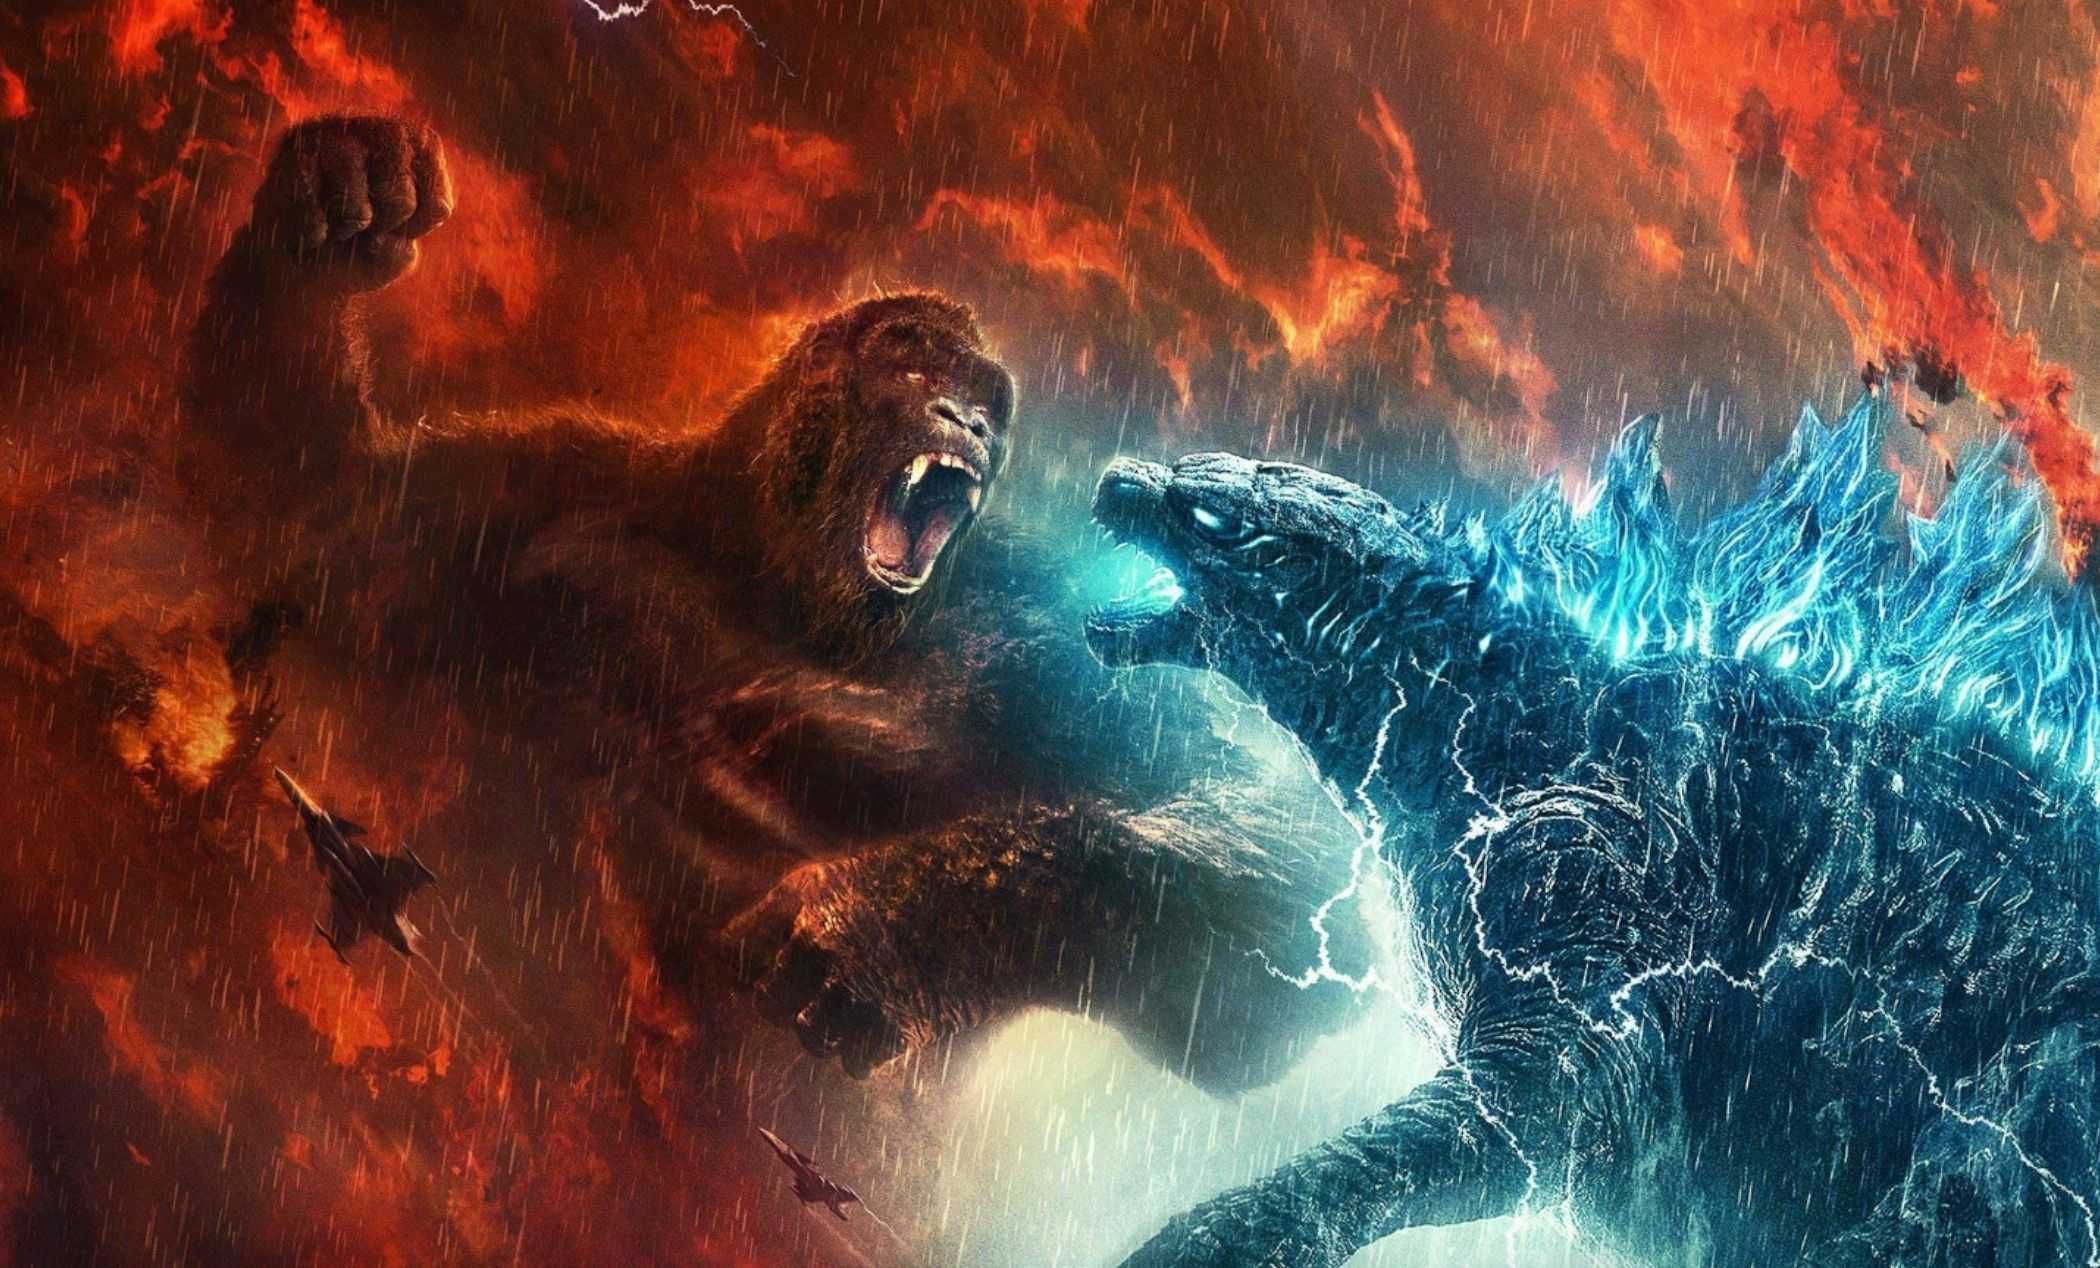 Godzilla Vs. Kong 2 plot details and full cast announced by Legendary